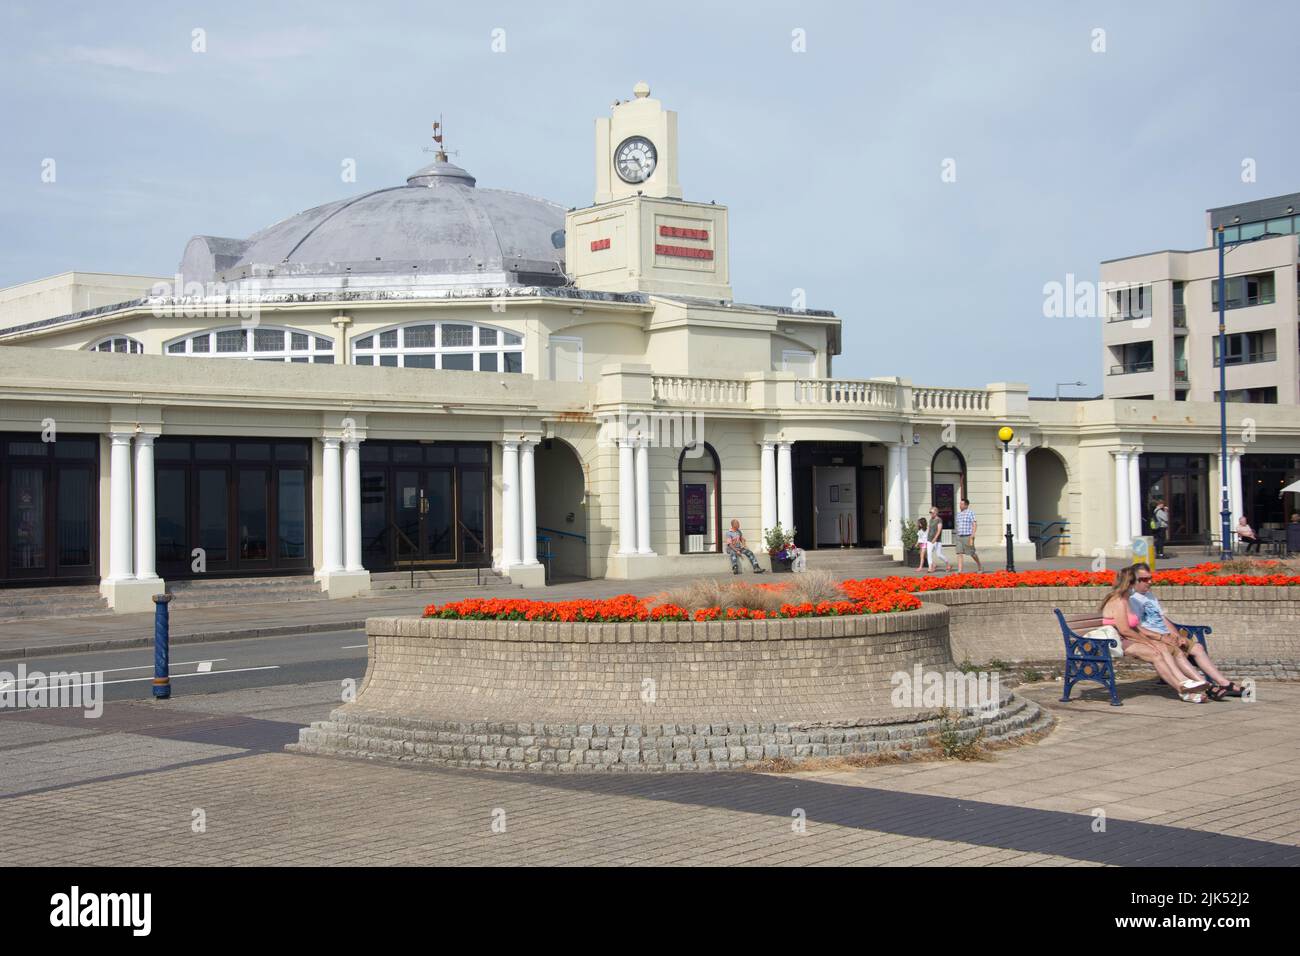 The Grand Pavilion, Esplanade, Porthcawl, Bridgend County Borough (Pen-y-bont), Wales (Cymru), United Kingdom Stock Photo